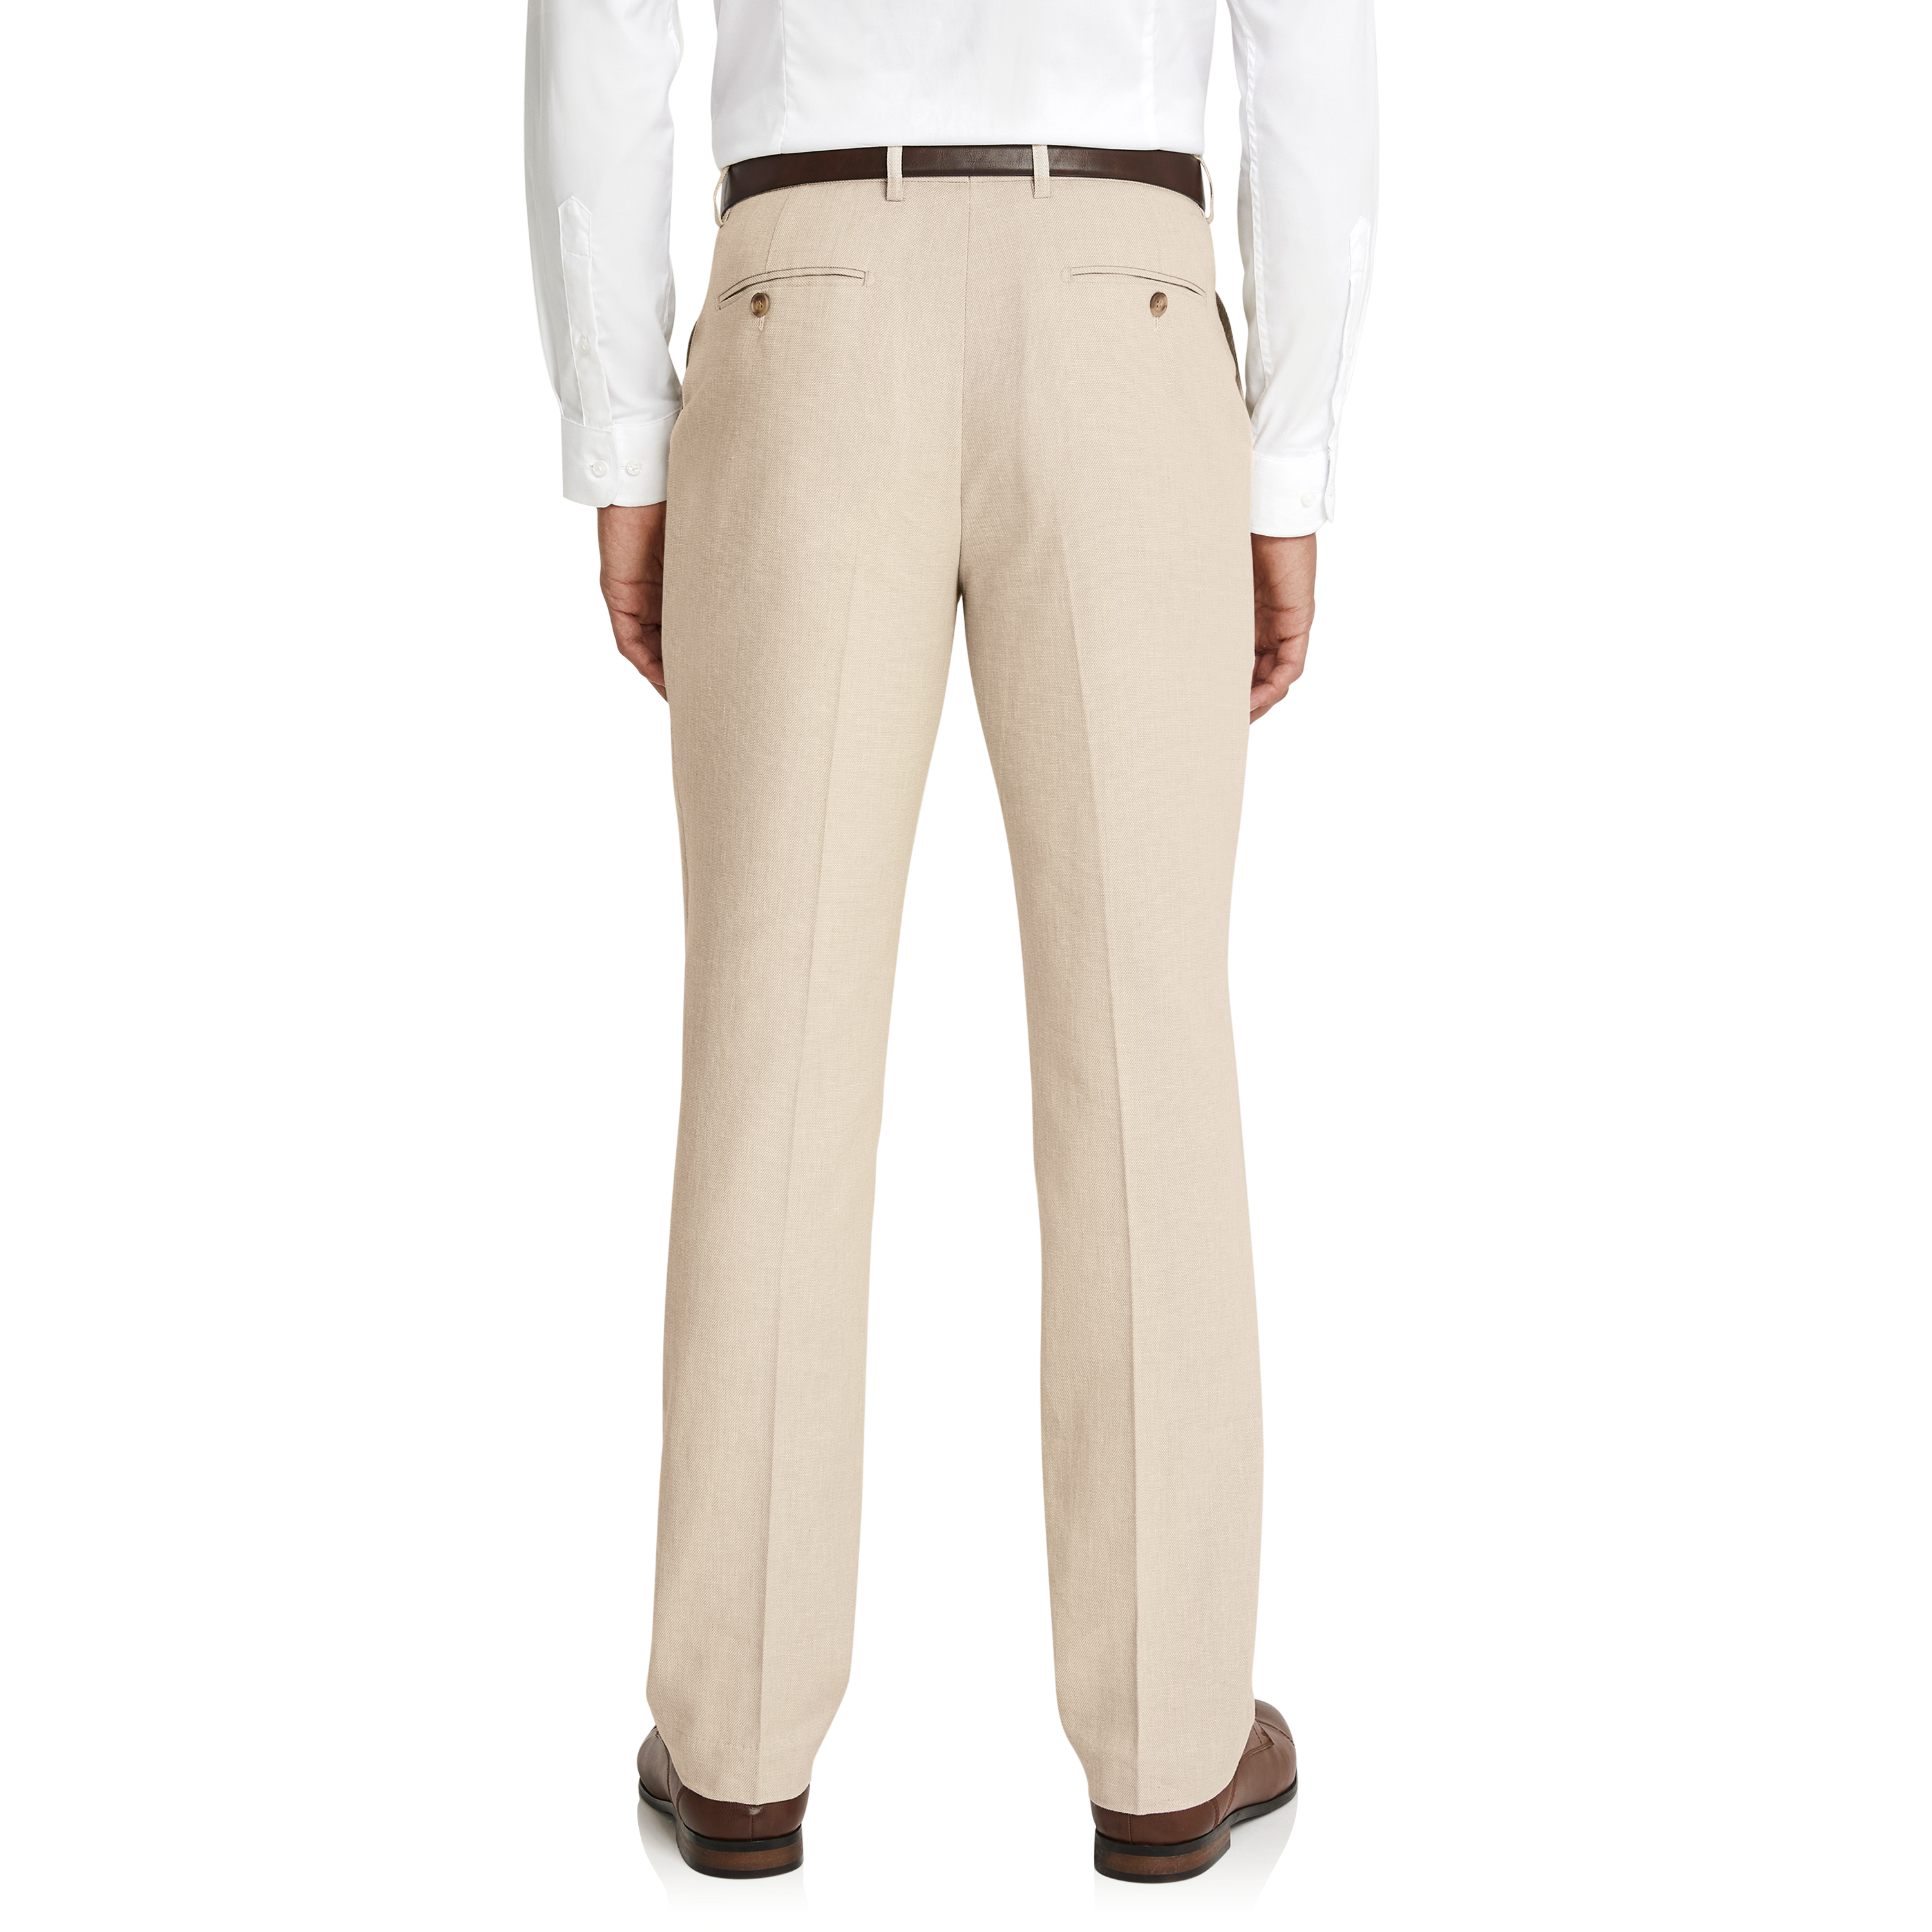 Polo Ralph Lauren Men's Pants Stretch Classic Fit, 5 Pocket Cotton Twill  Blend | eBay